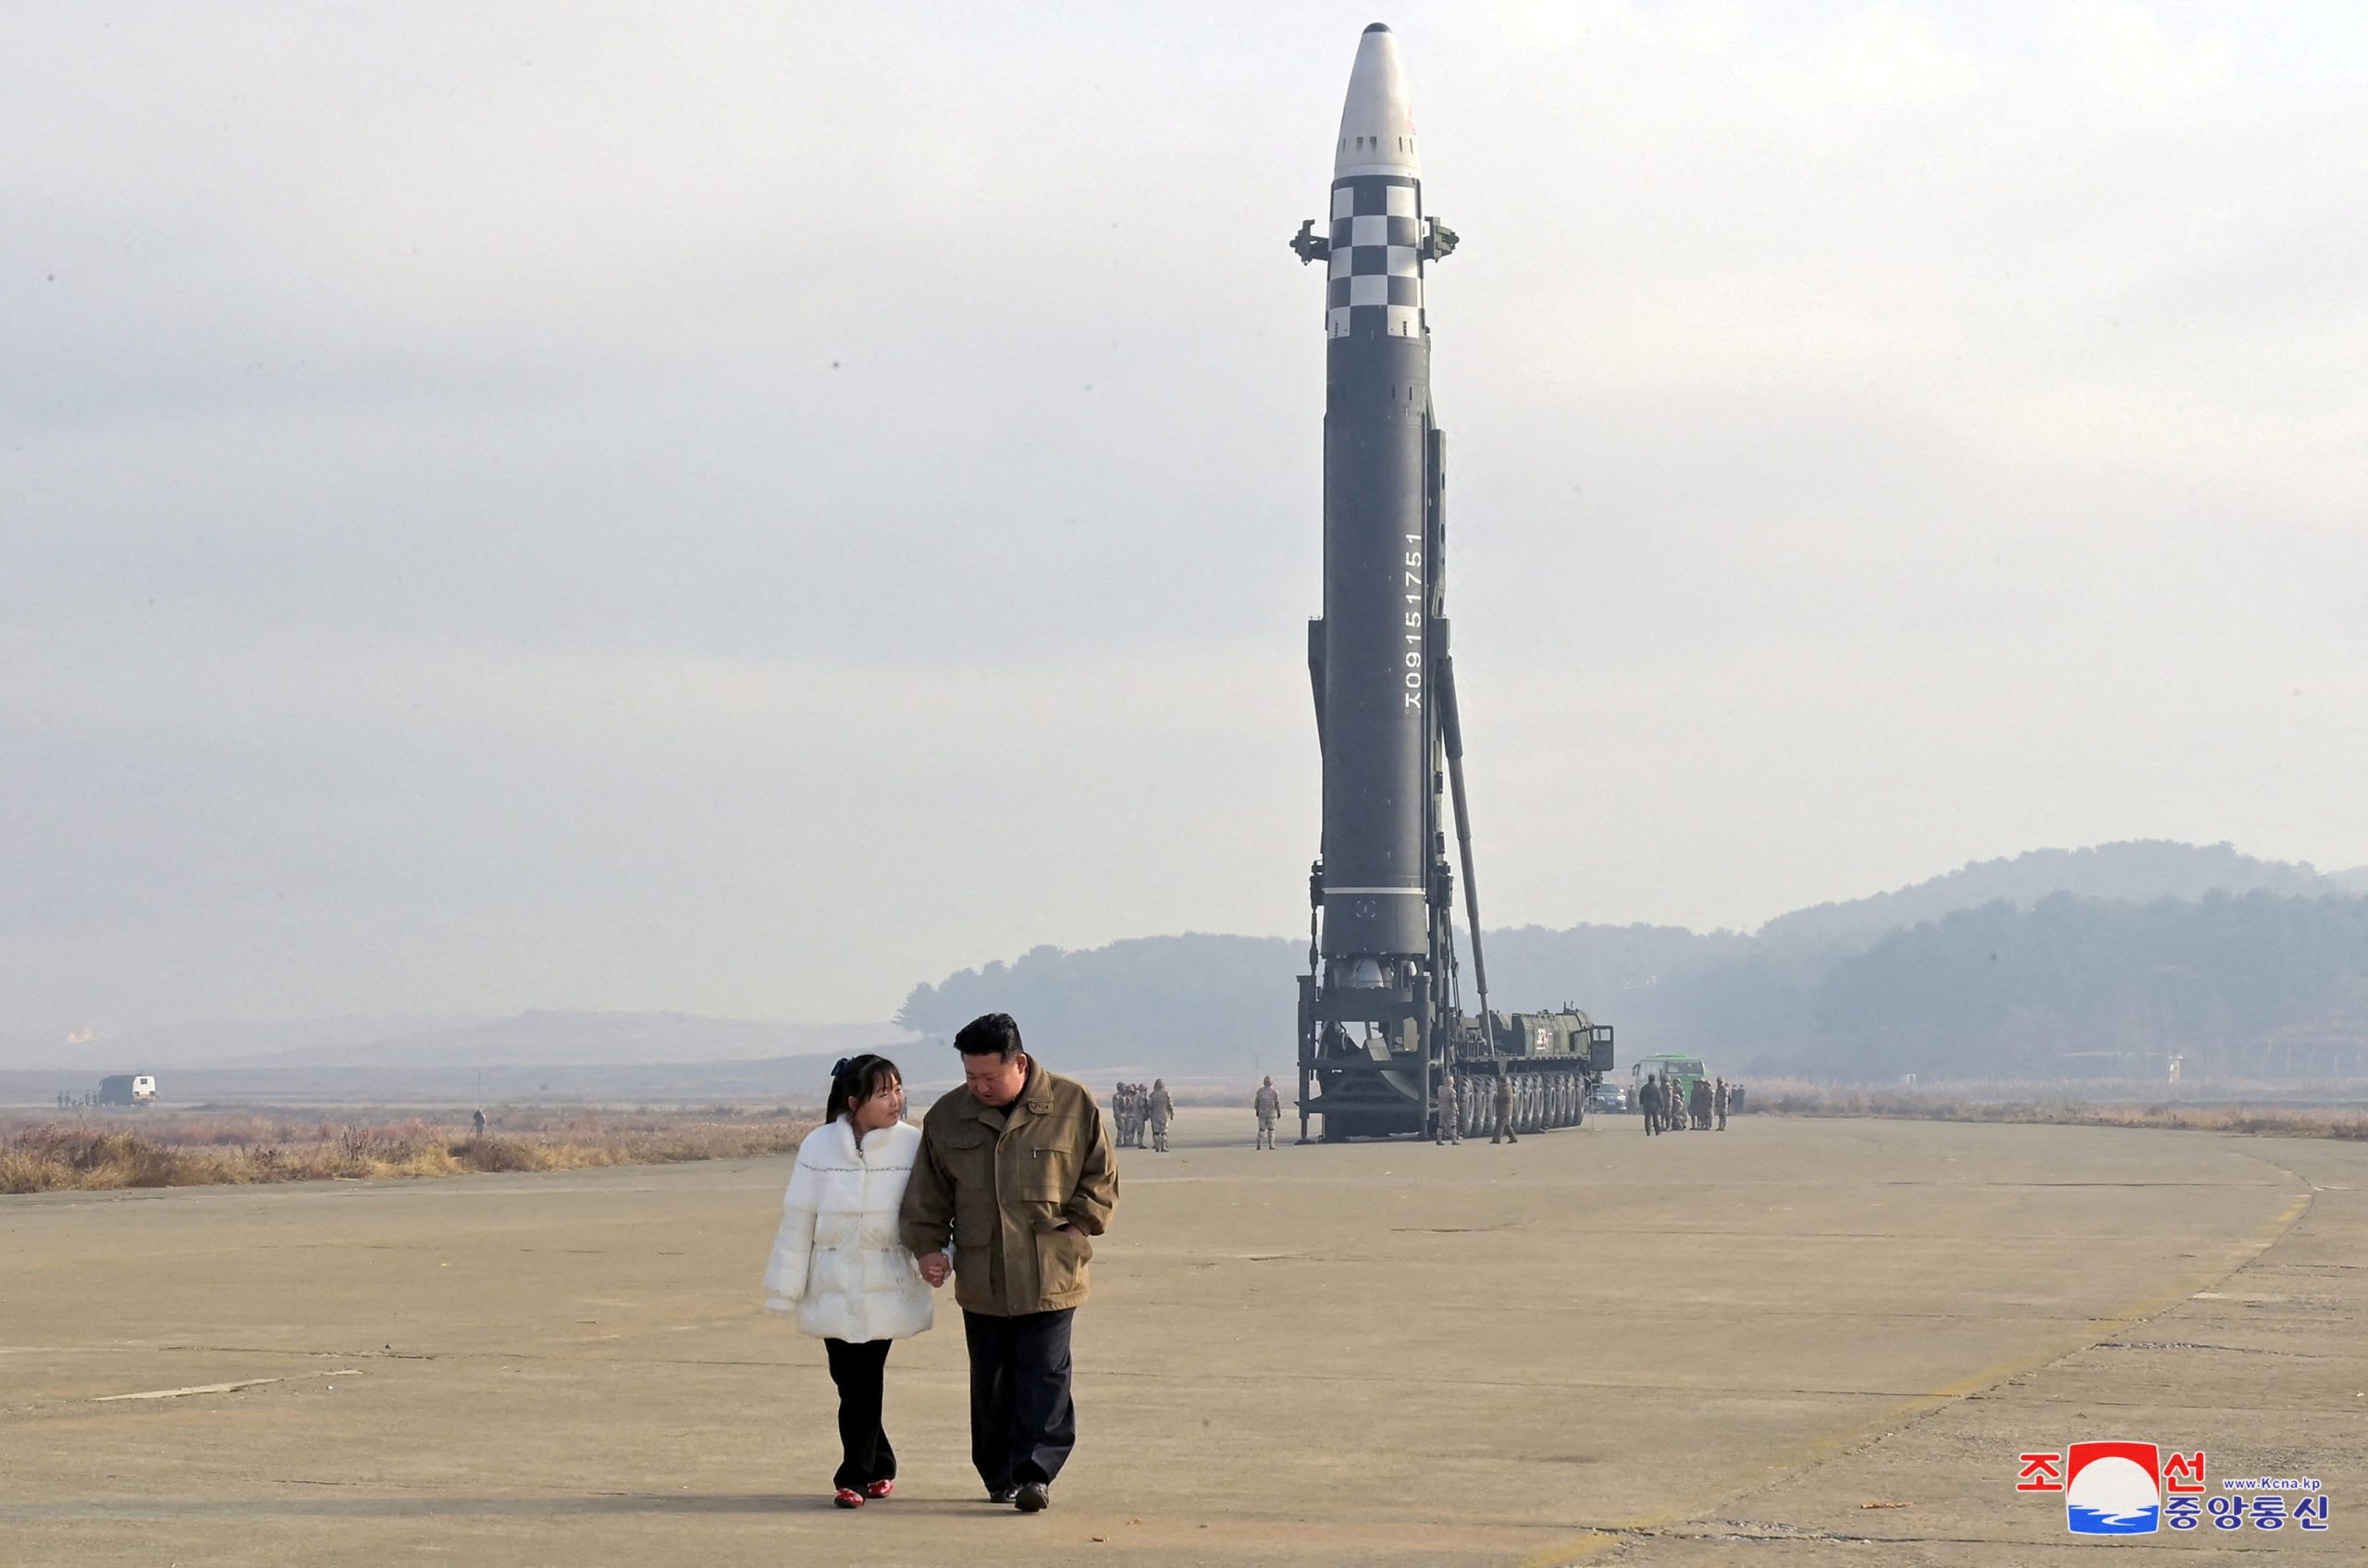 North Korea Fires Ballistic Missile After Unprecedented Year Of Tests